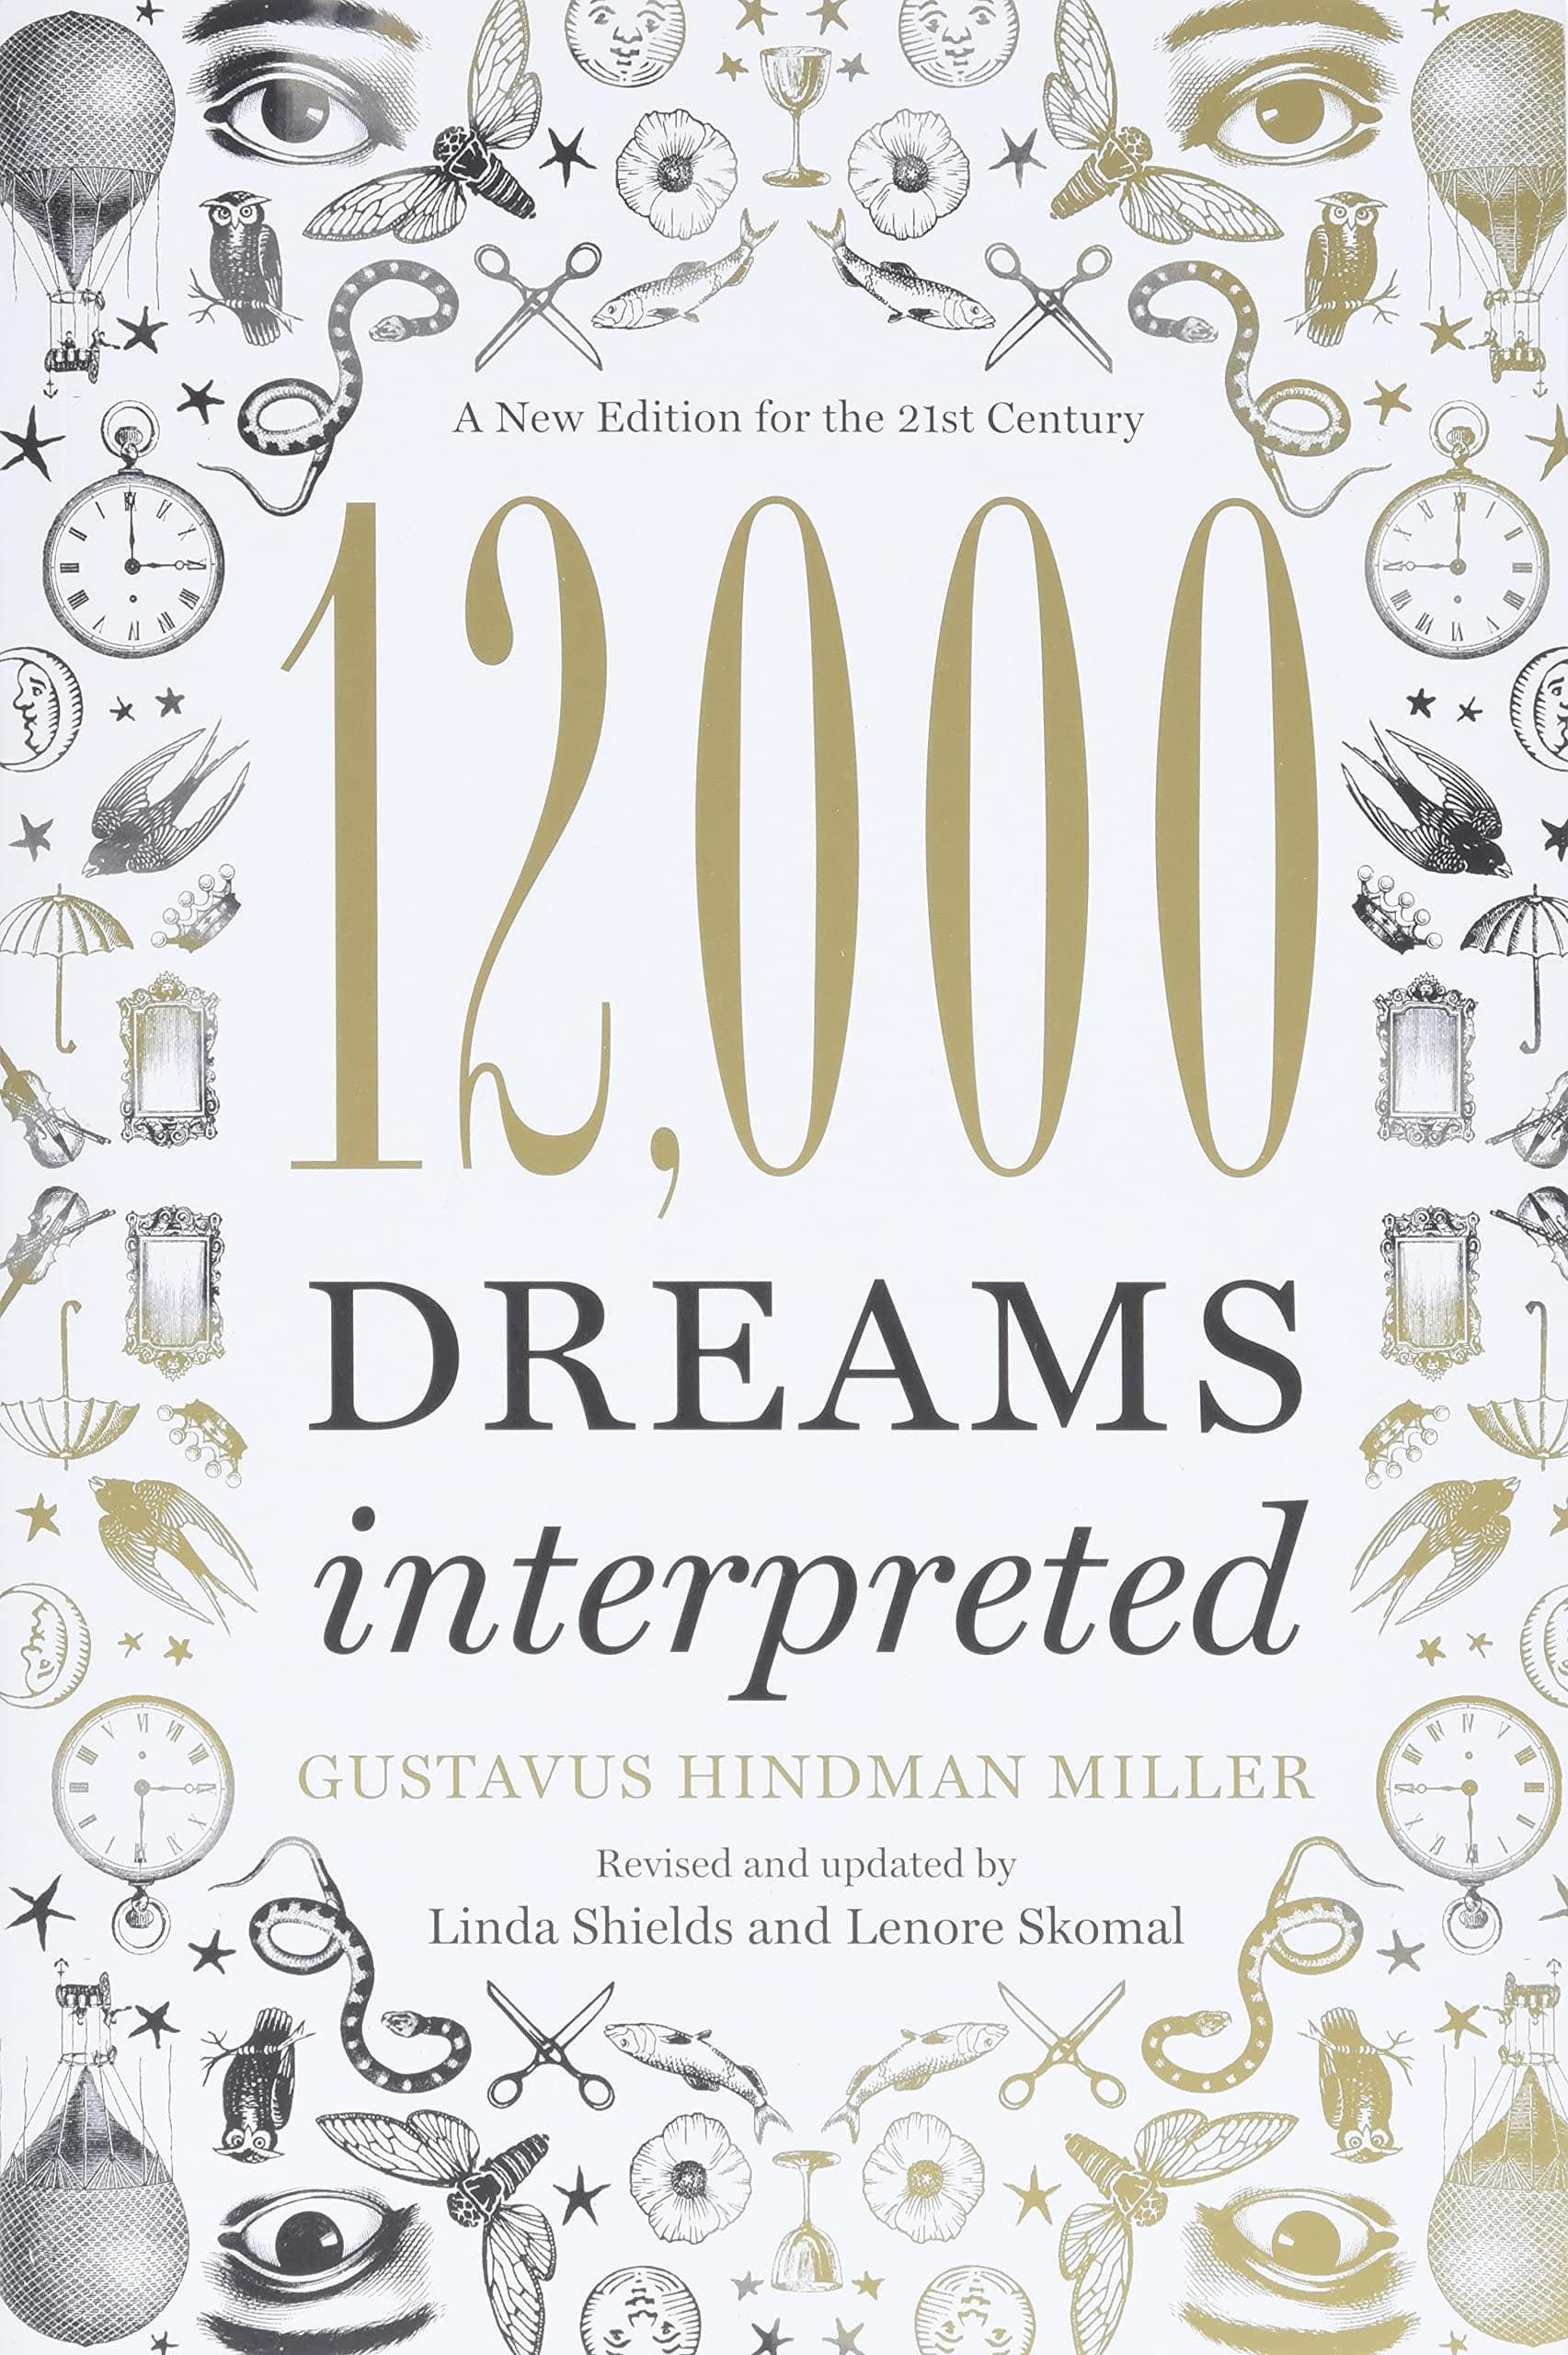 12,000 Dreams Interpreted - SureShot Books Publishing LLC